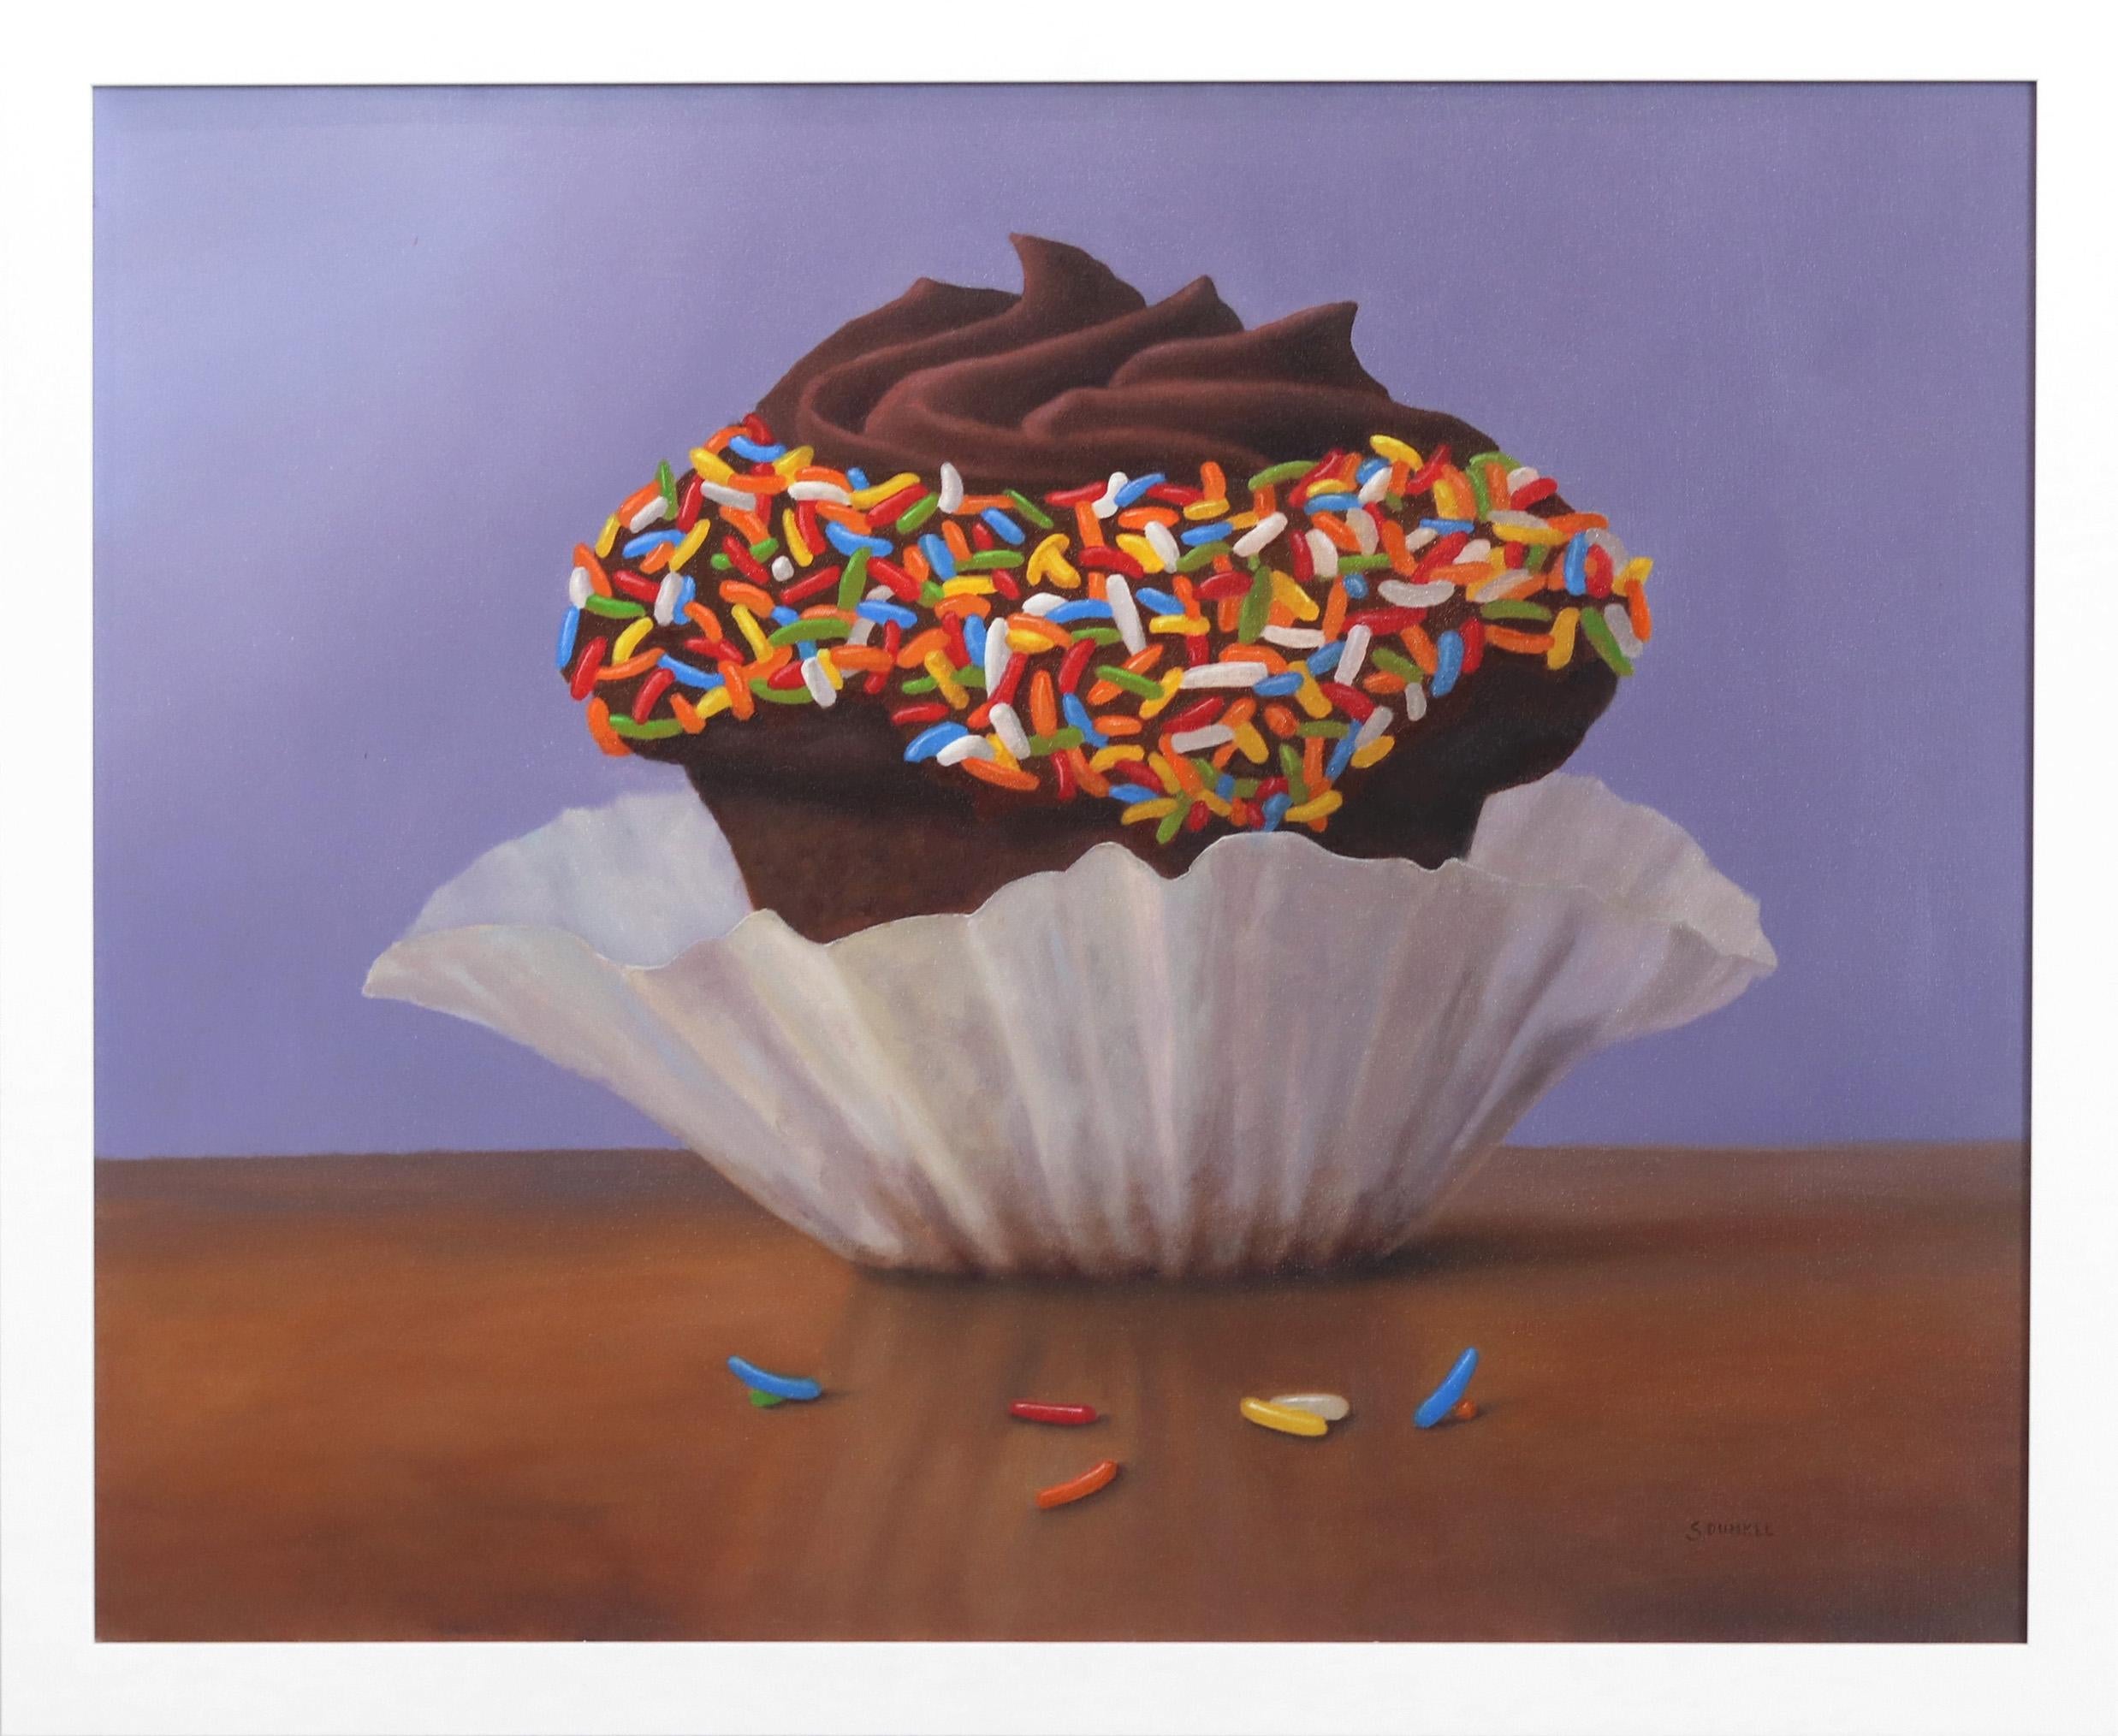 Sprinkles - Photorealist Chocolate Cupcake Colorful Sprinkles on Purple Painting